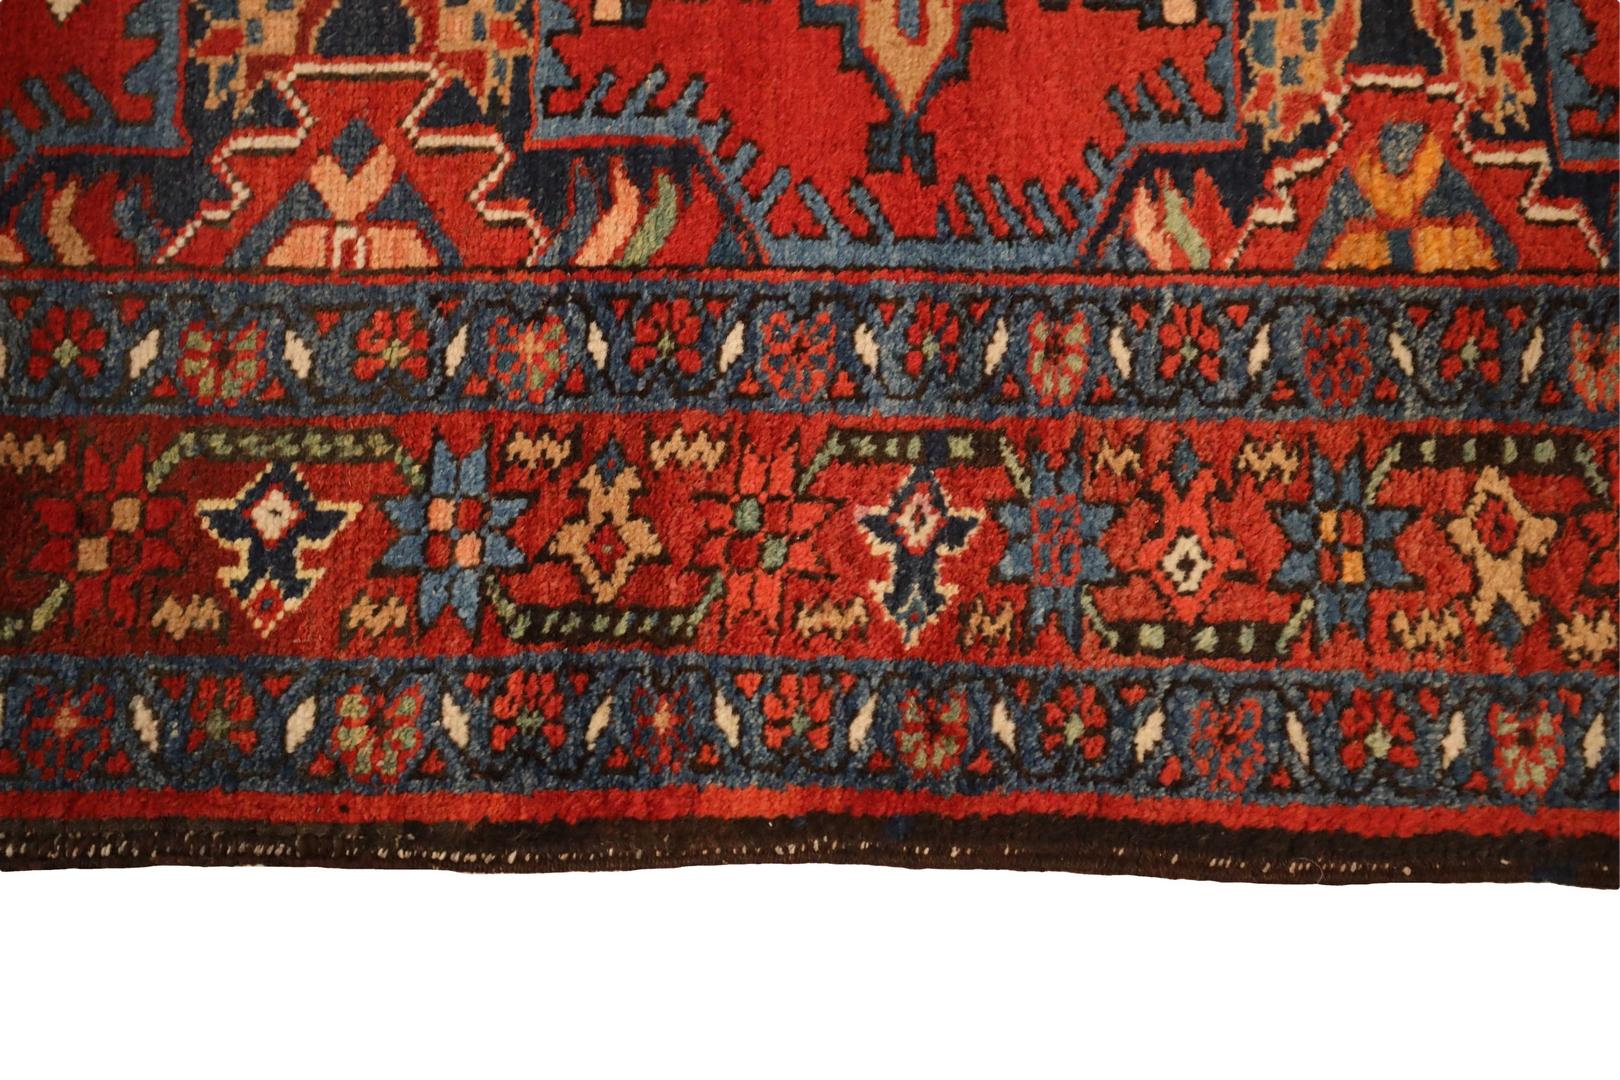 20th Century N.W. Persian Semi-Antique rug, Red Beige Sea-Green - 3'2